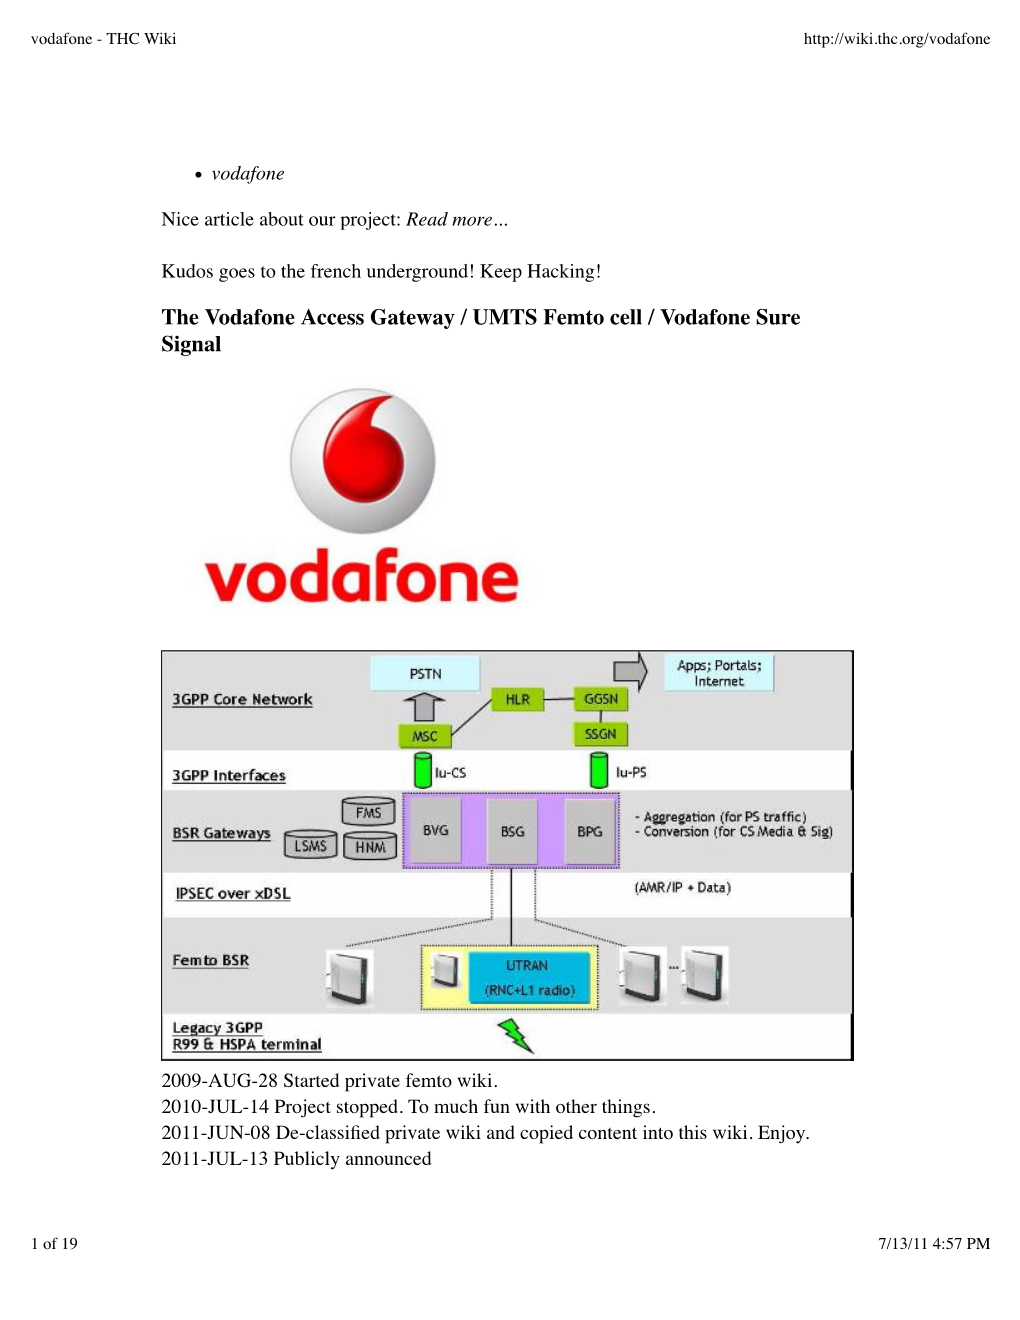 The Vodafone Access Gateway / UMTS Femto Cell / Vodafone Sure Signal